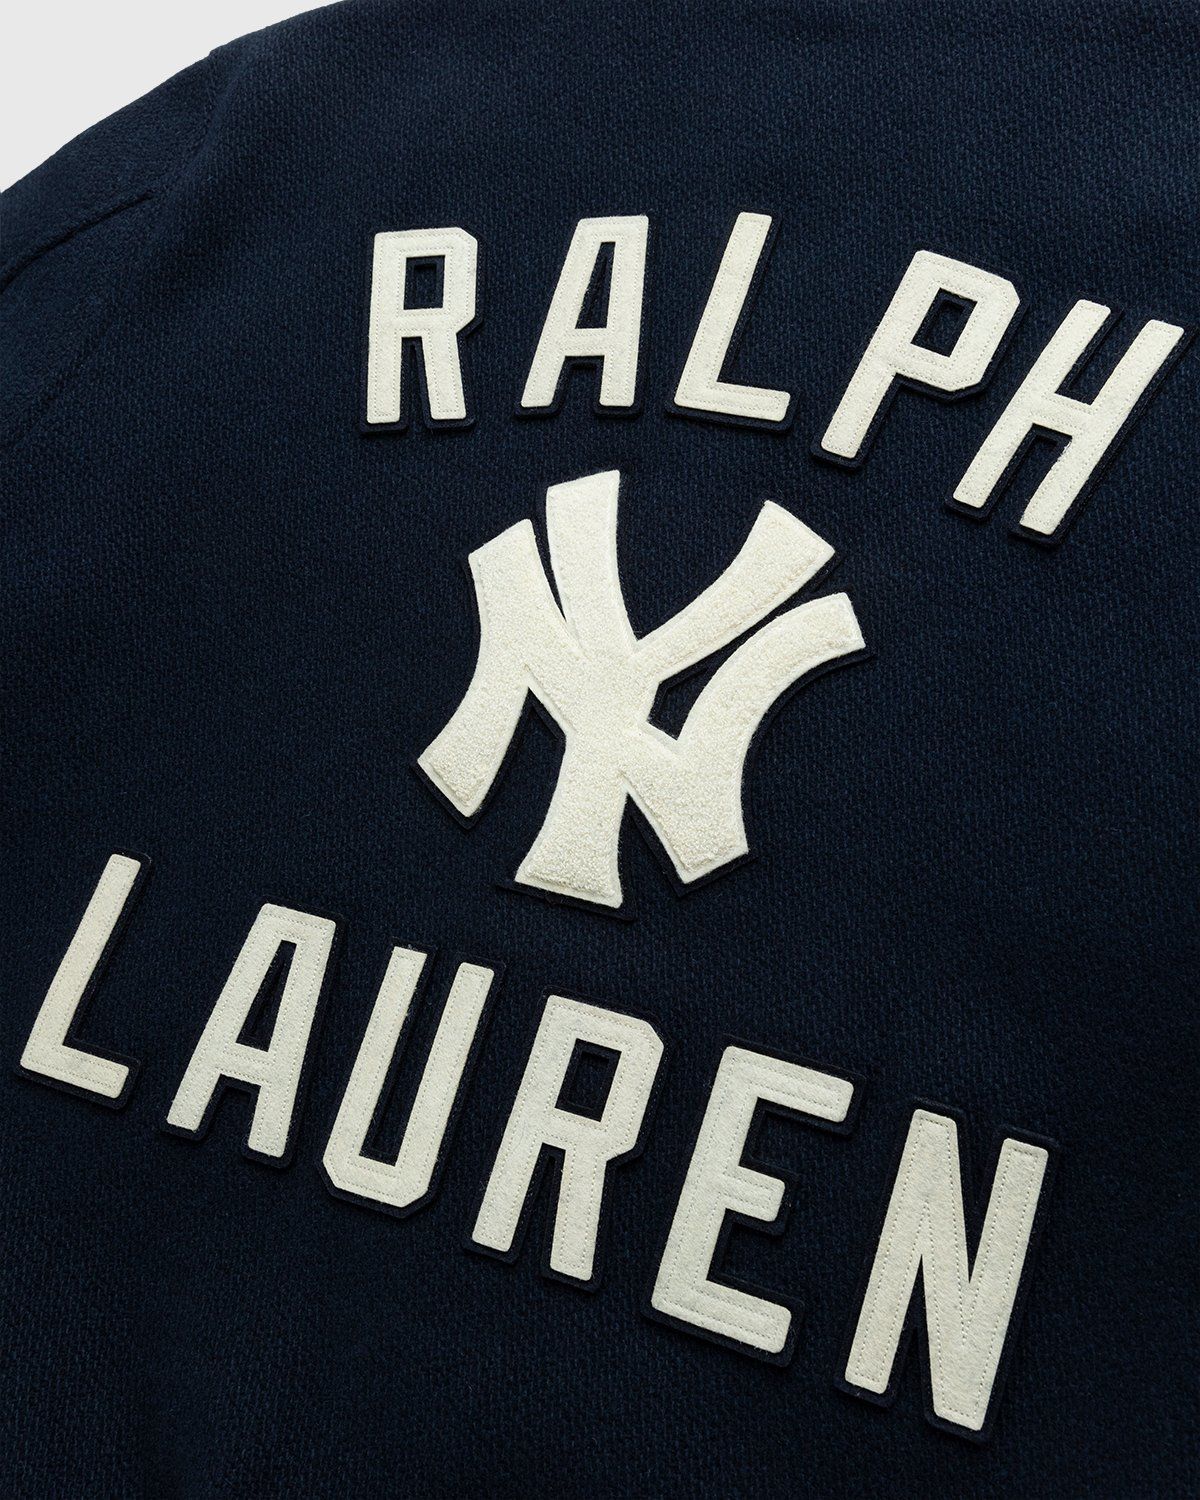 Ralph Lauren – Yankees Jacket Navy | Highsnobiety Shop